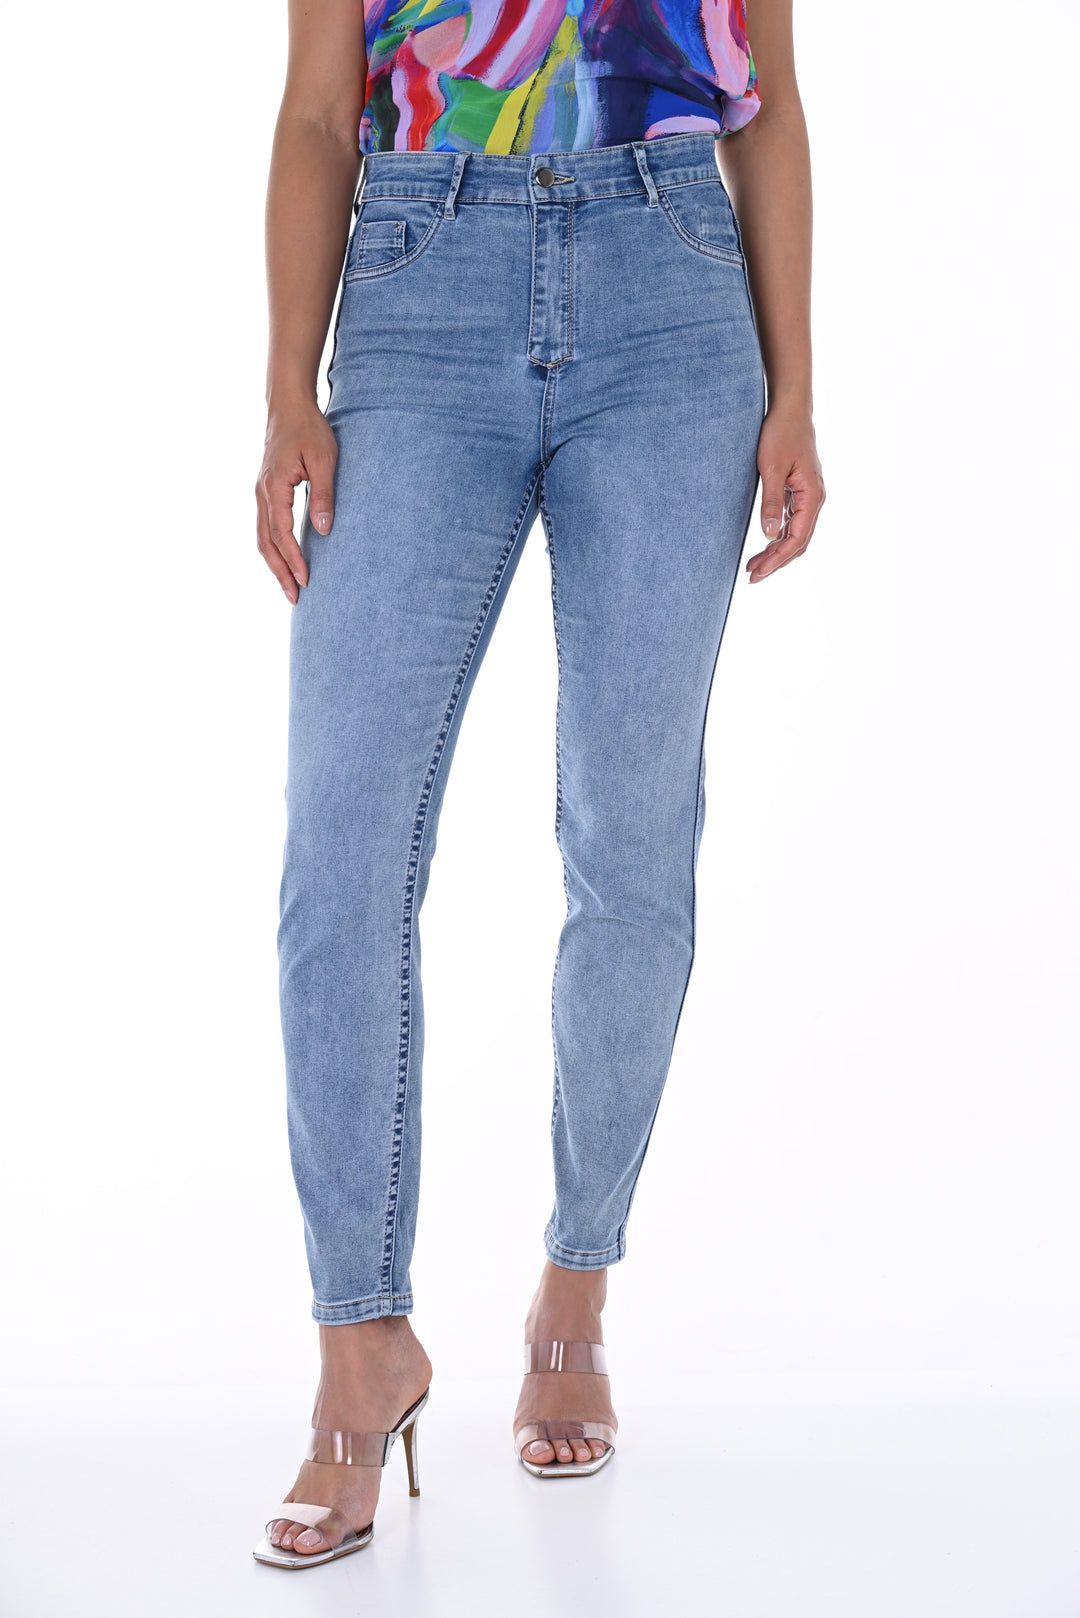 Frank Lyman Reversible Jeans 246248U